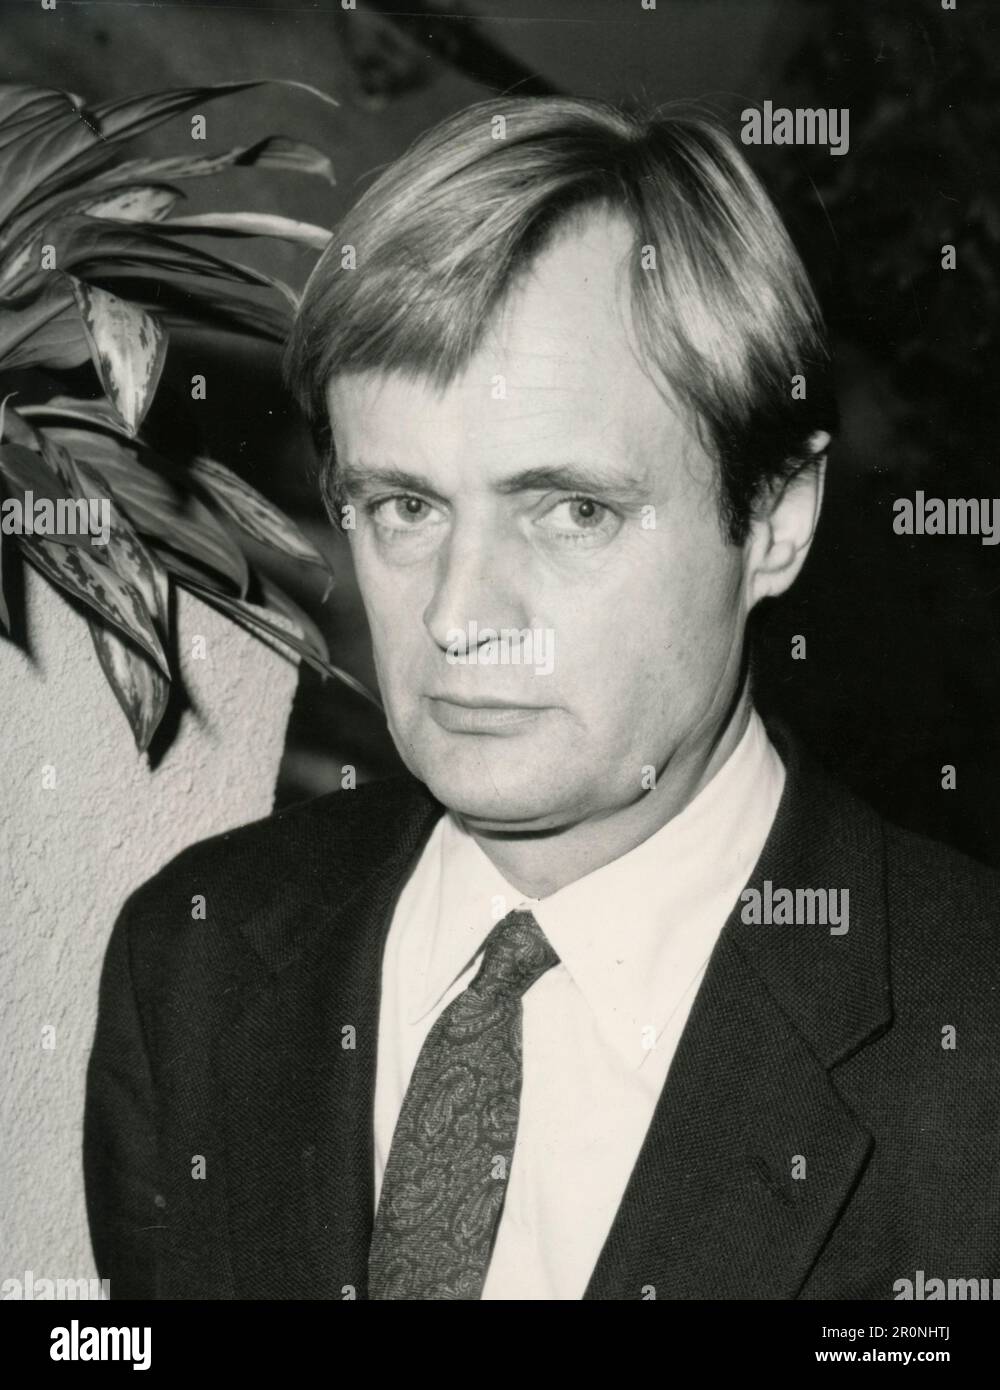 Portrait of Scottish actor David McCallum, UK 1985 Stock Photo